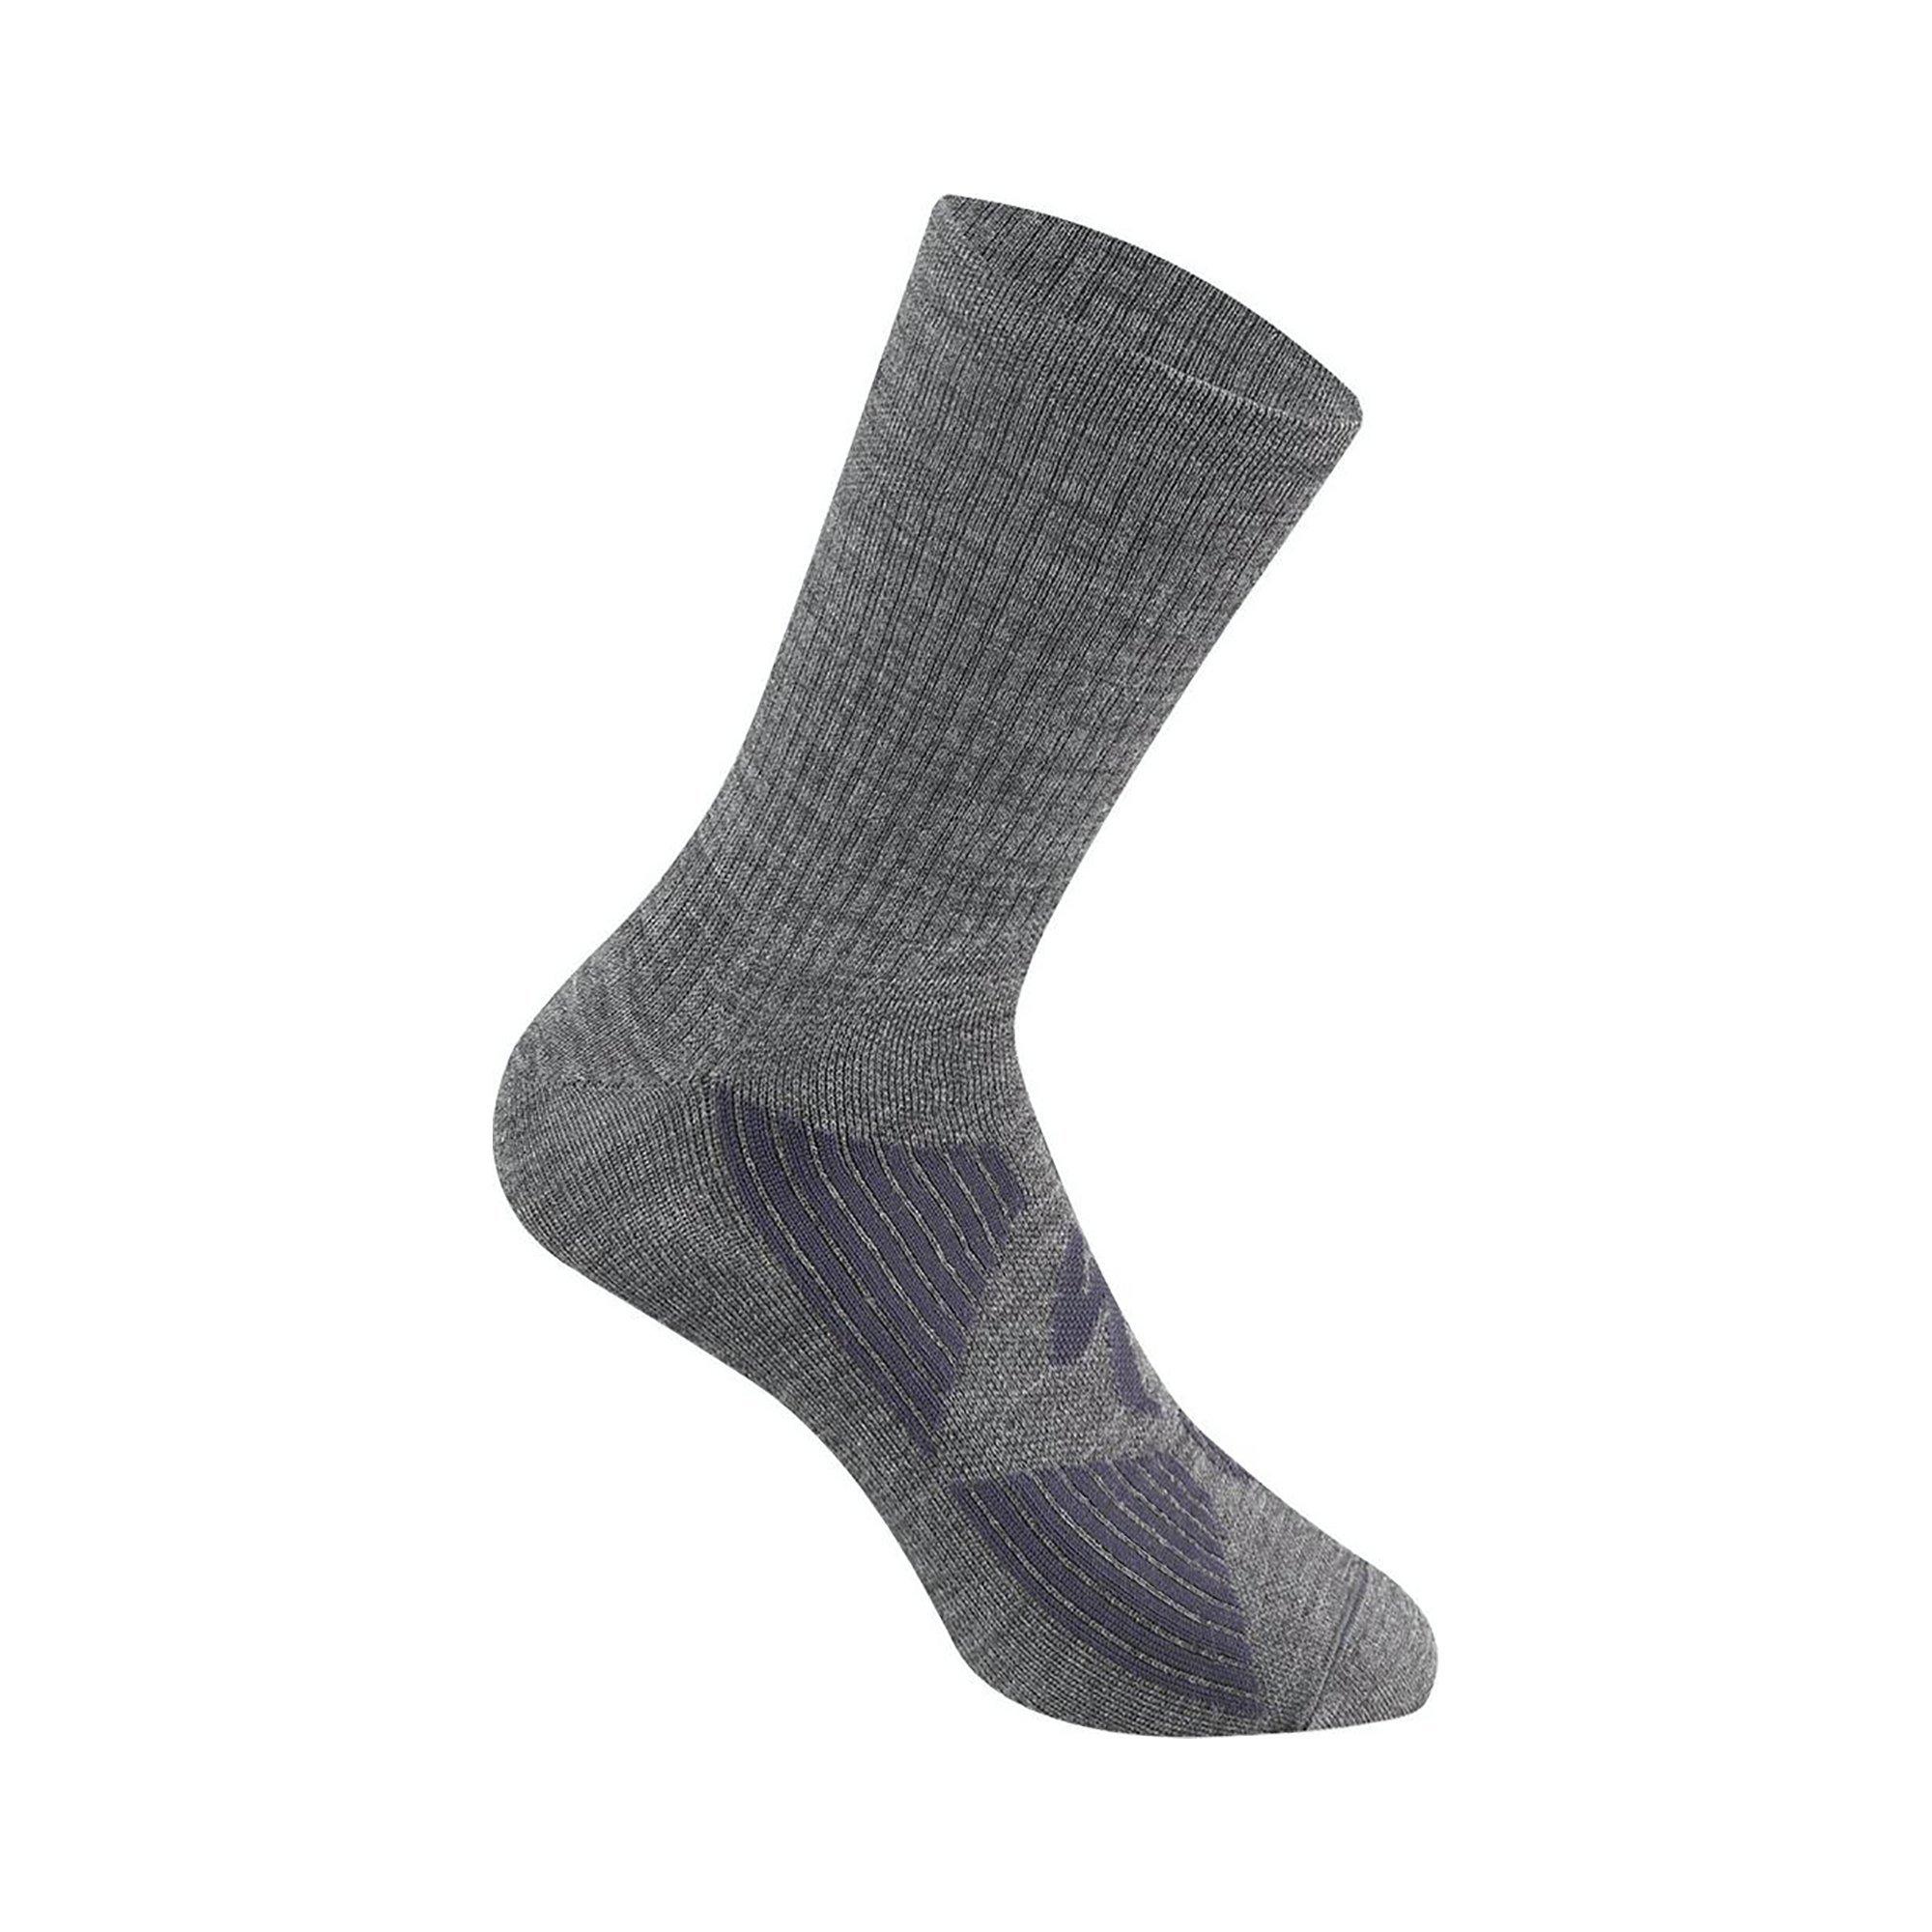 SL Elite Merino Wool Women's Sock